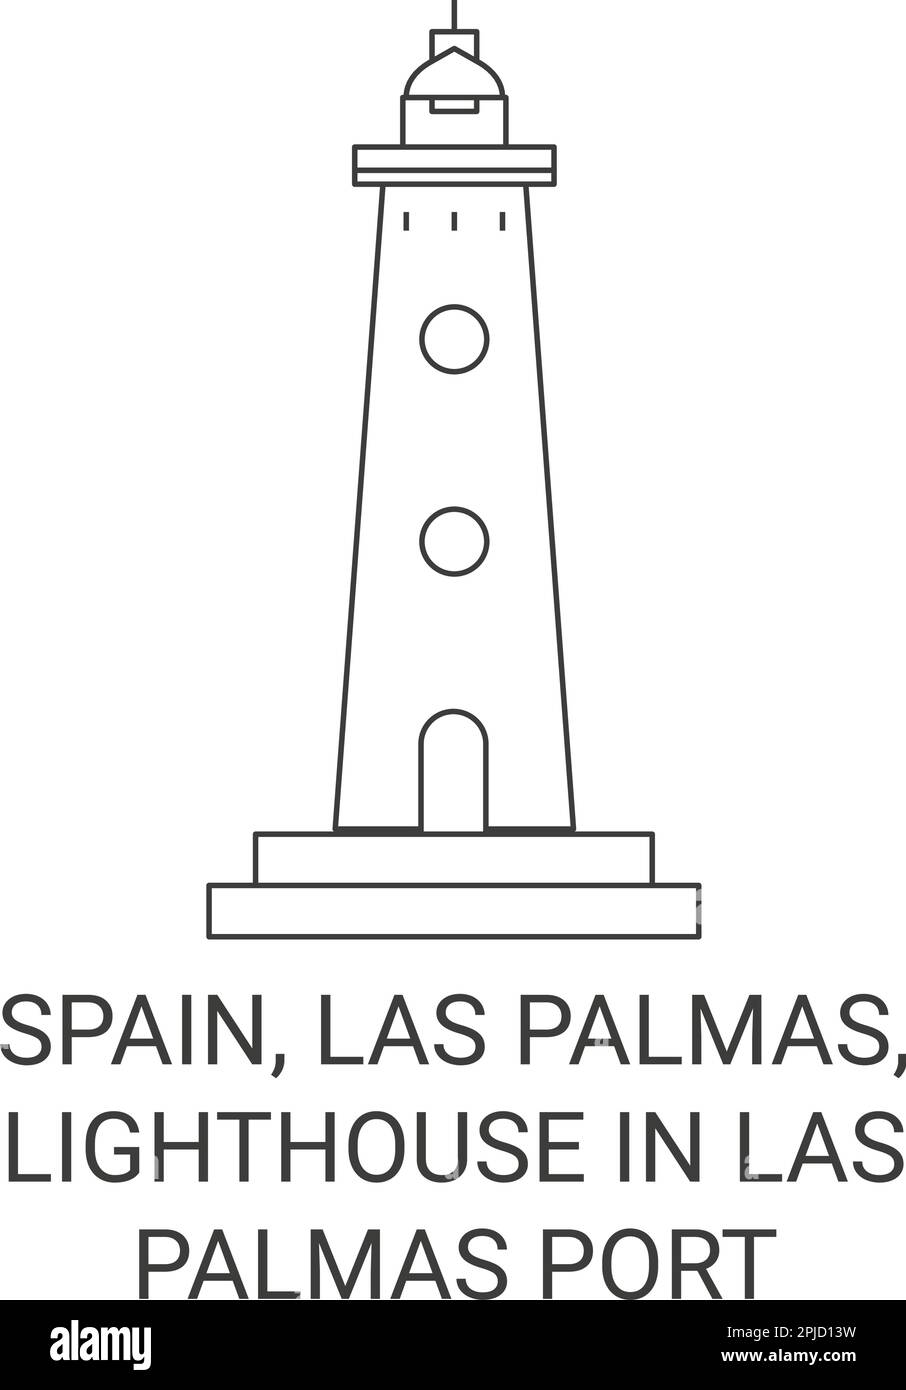 Spain, Las Palmas, Lighthouse In Las Palmas Port travel landmark vector illustration Stock Vector